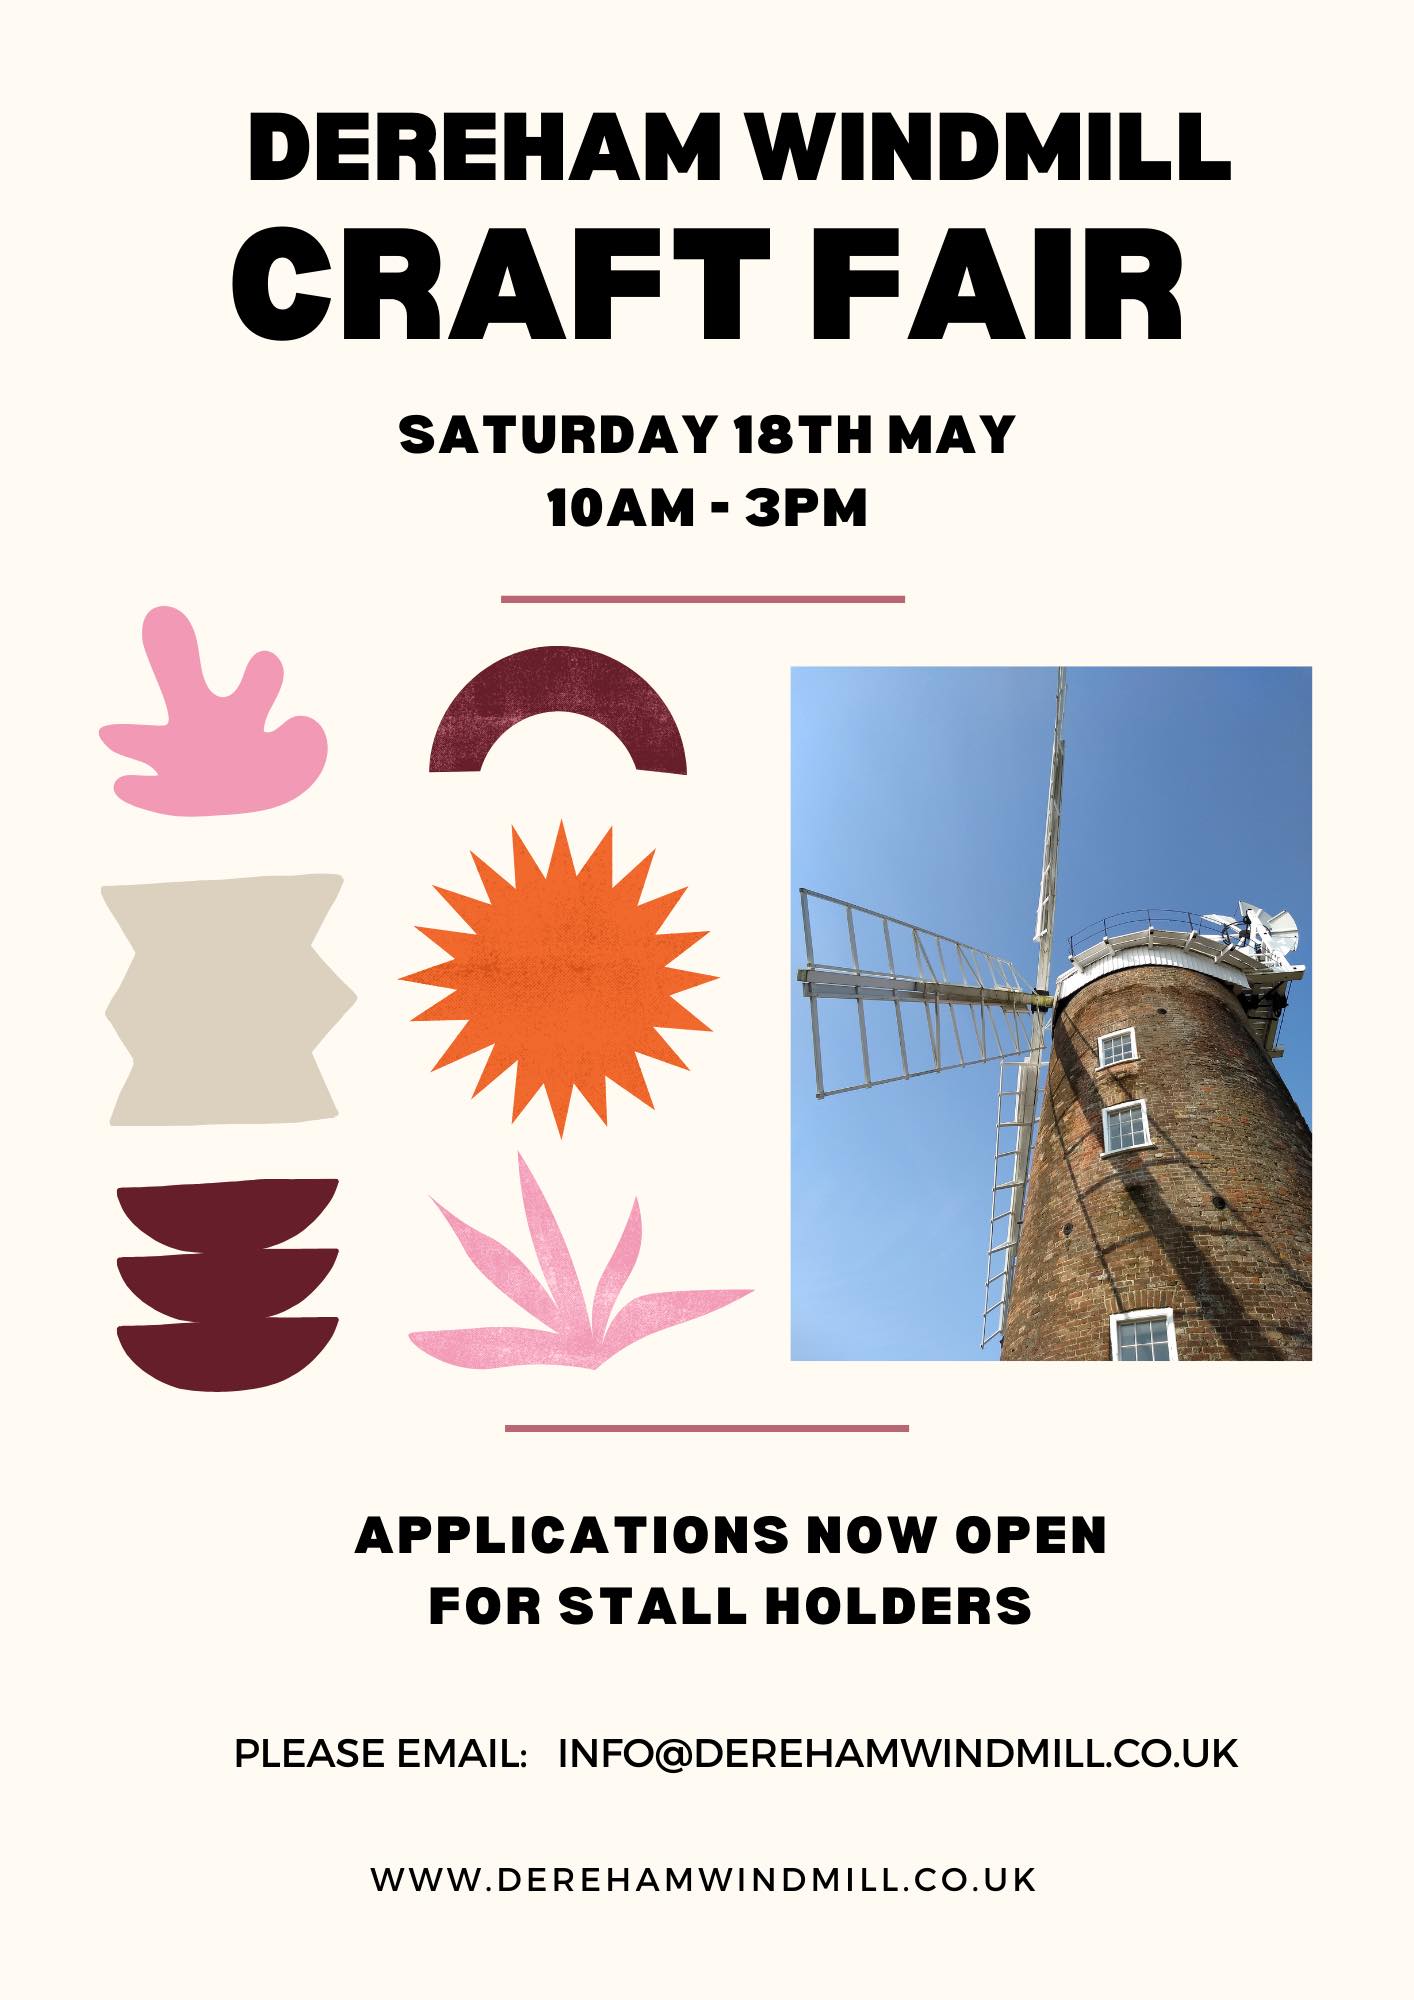 Annual Craft Fair – Dereham Windmill, 18th May